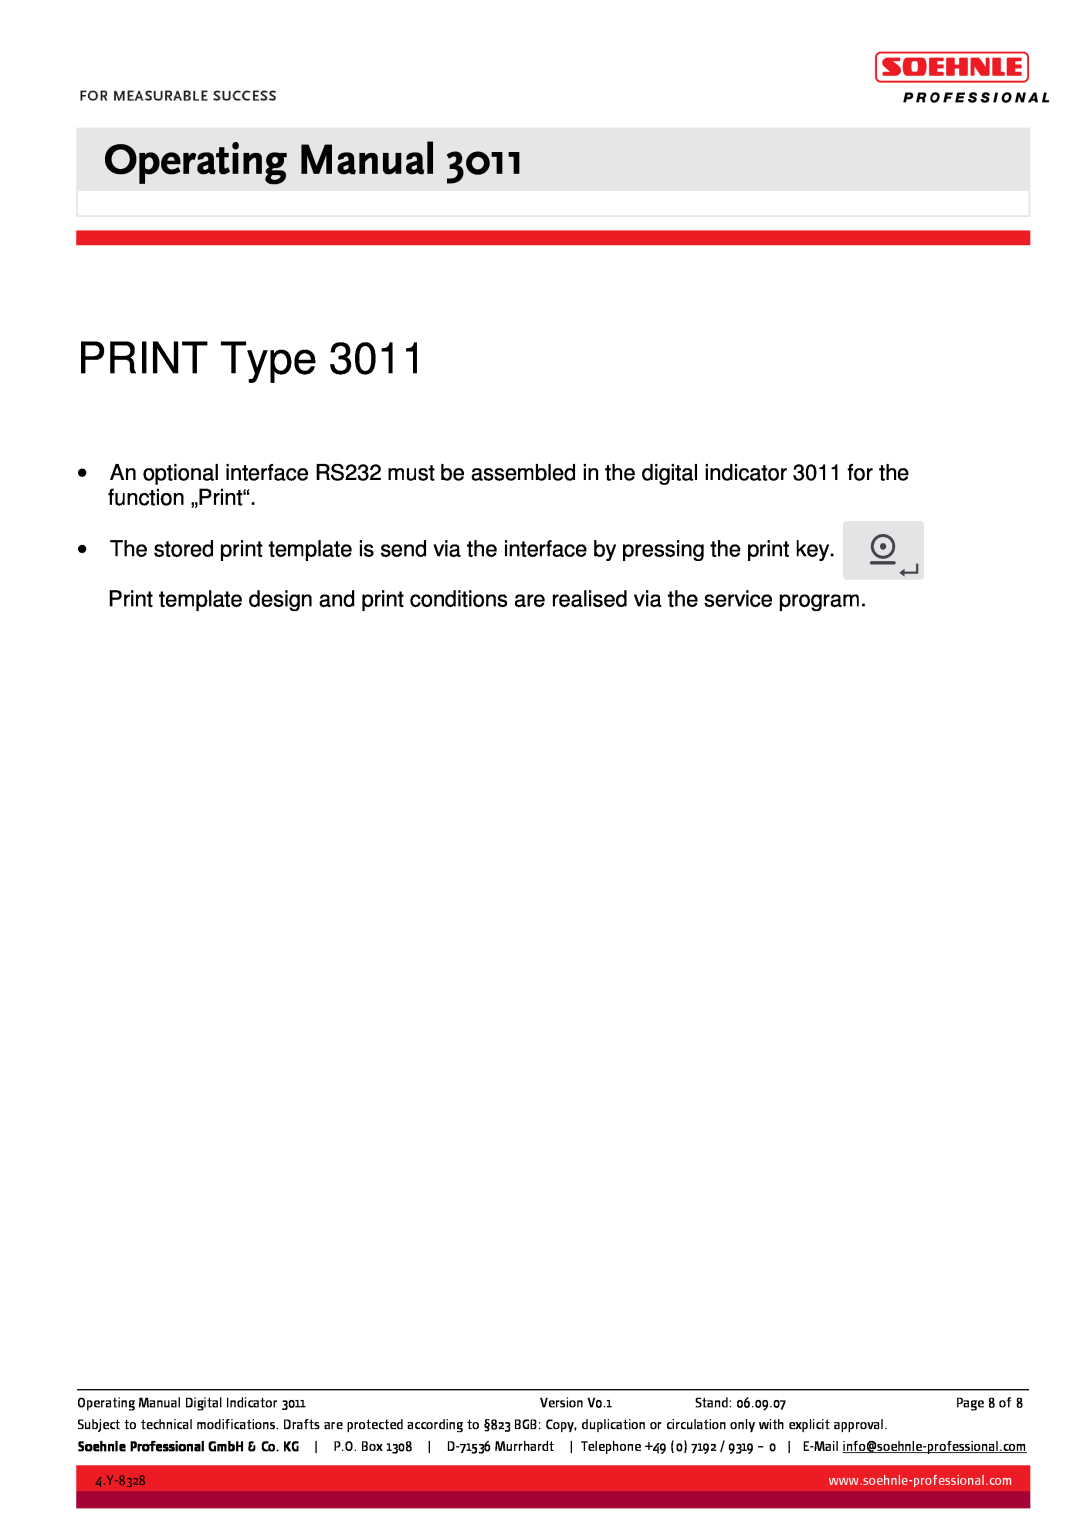 Soehnle 3011 manual PRINT Type, Operating Manual 